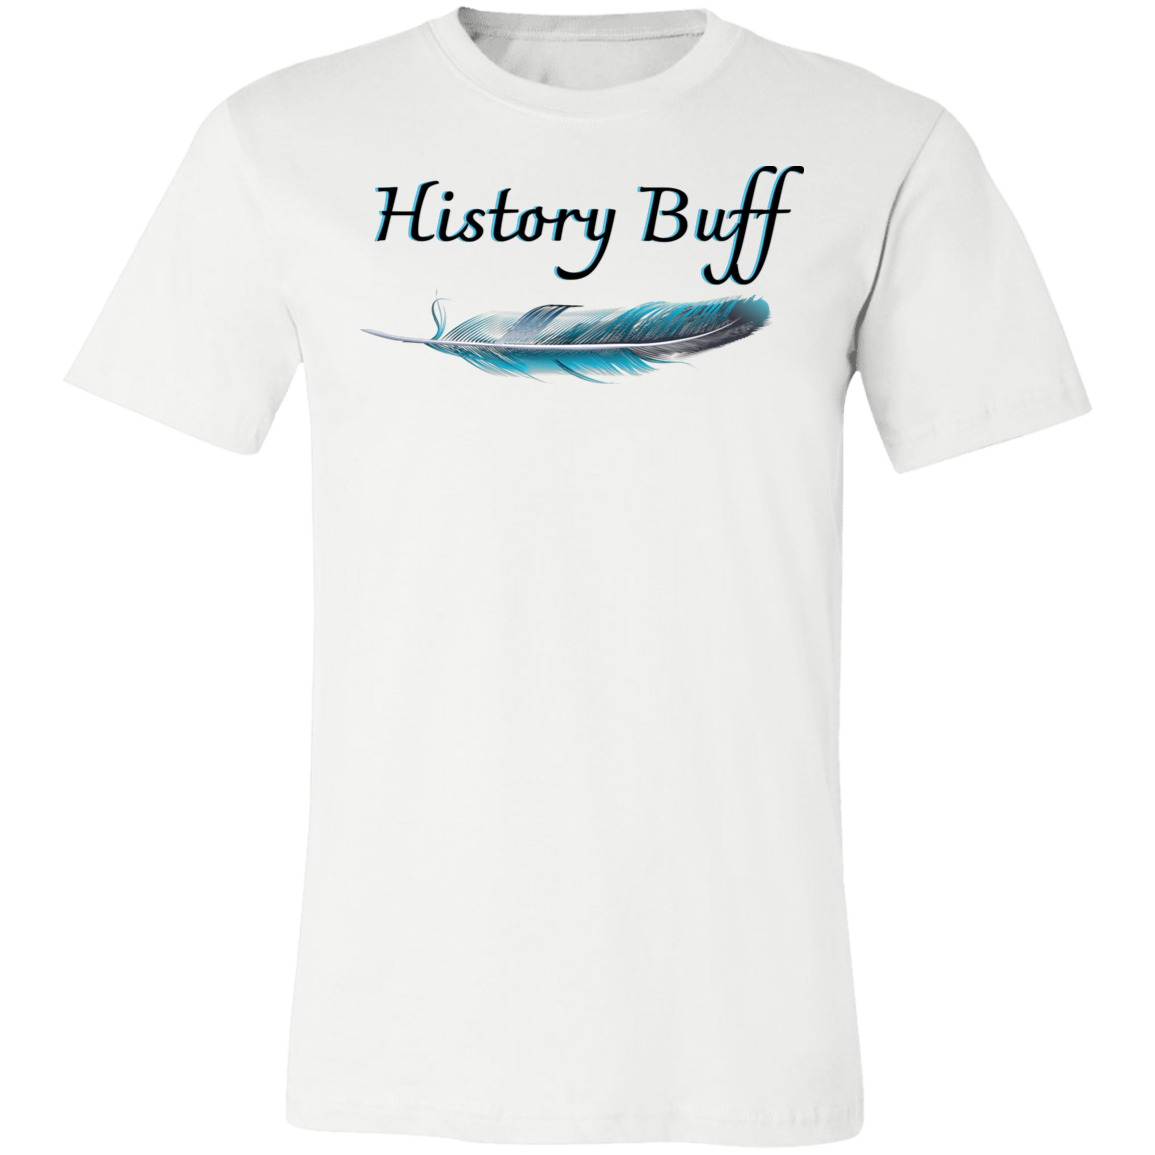 History Buff Unisex Short-Sleeve T-Shirt